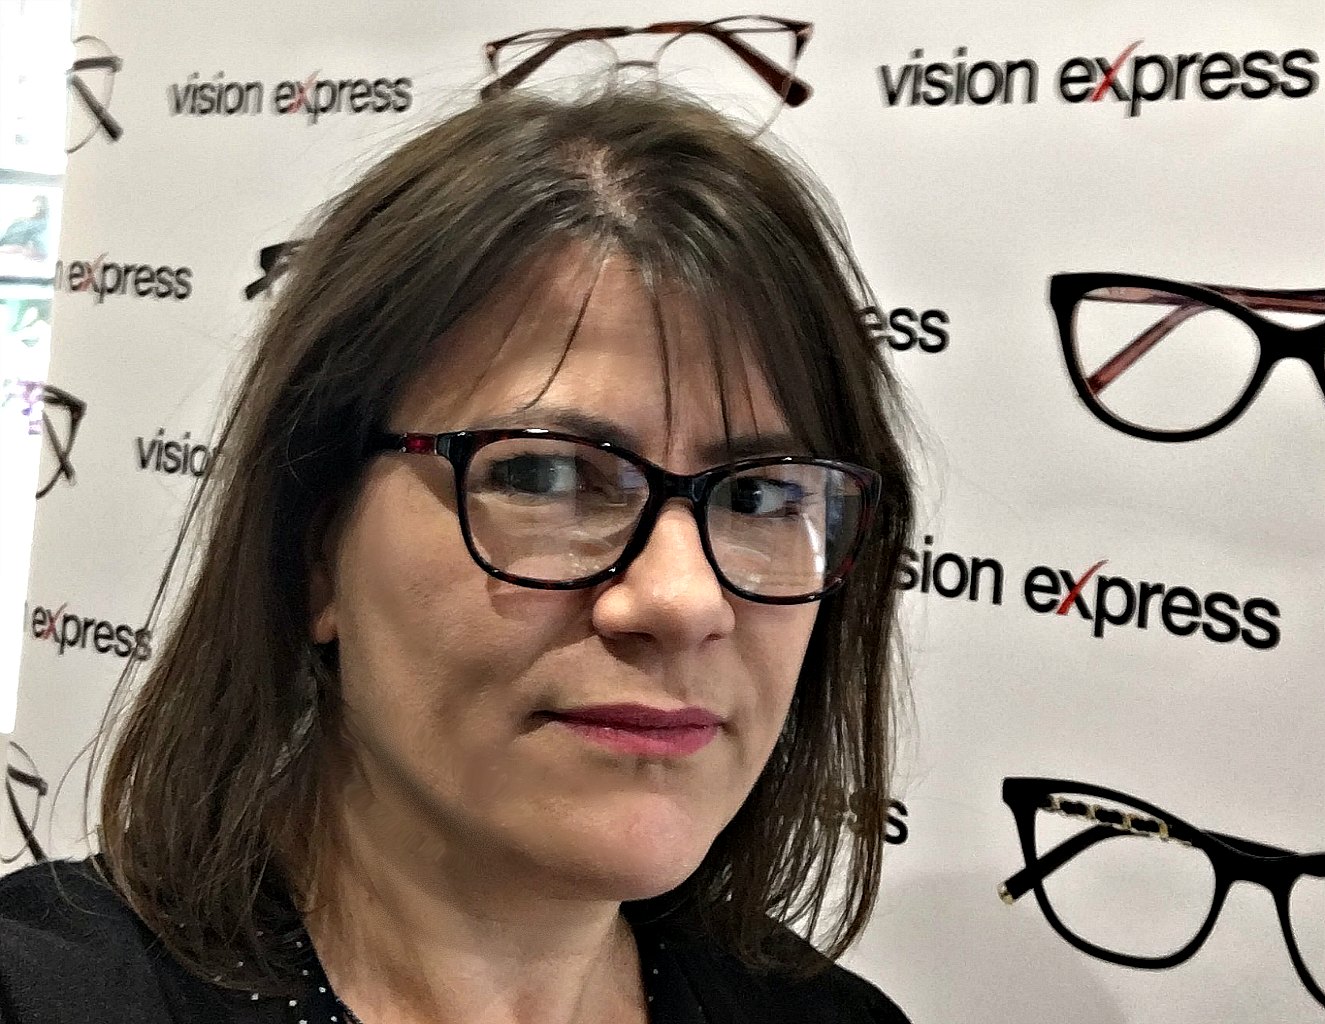 dior glasses vision express